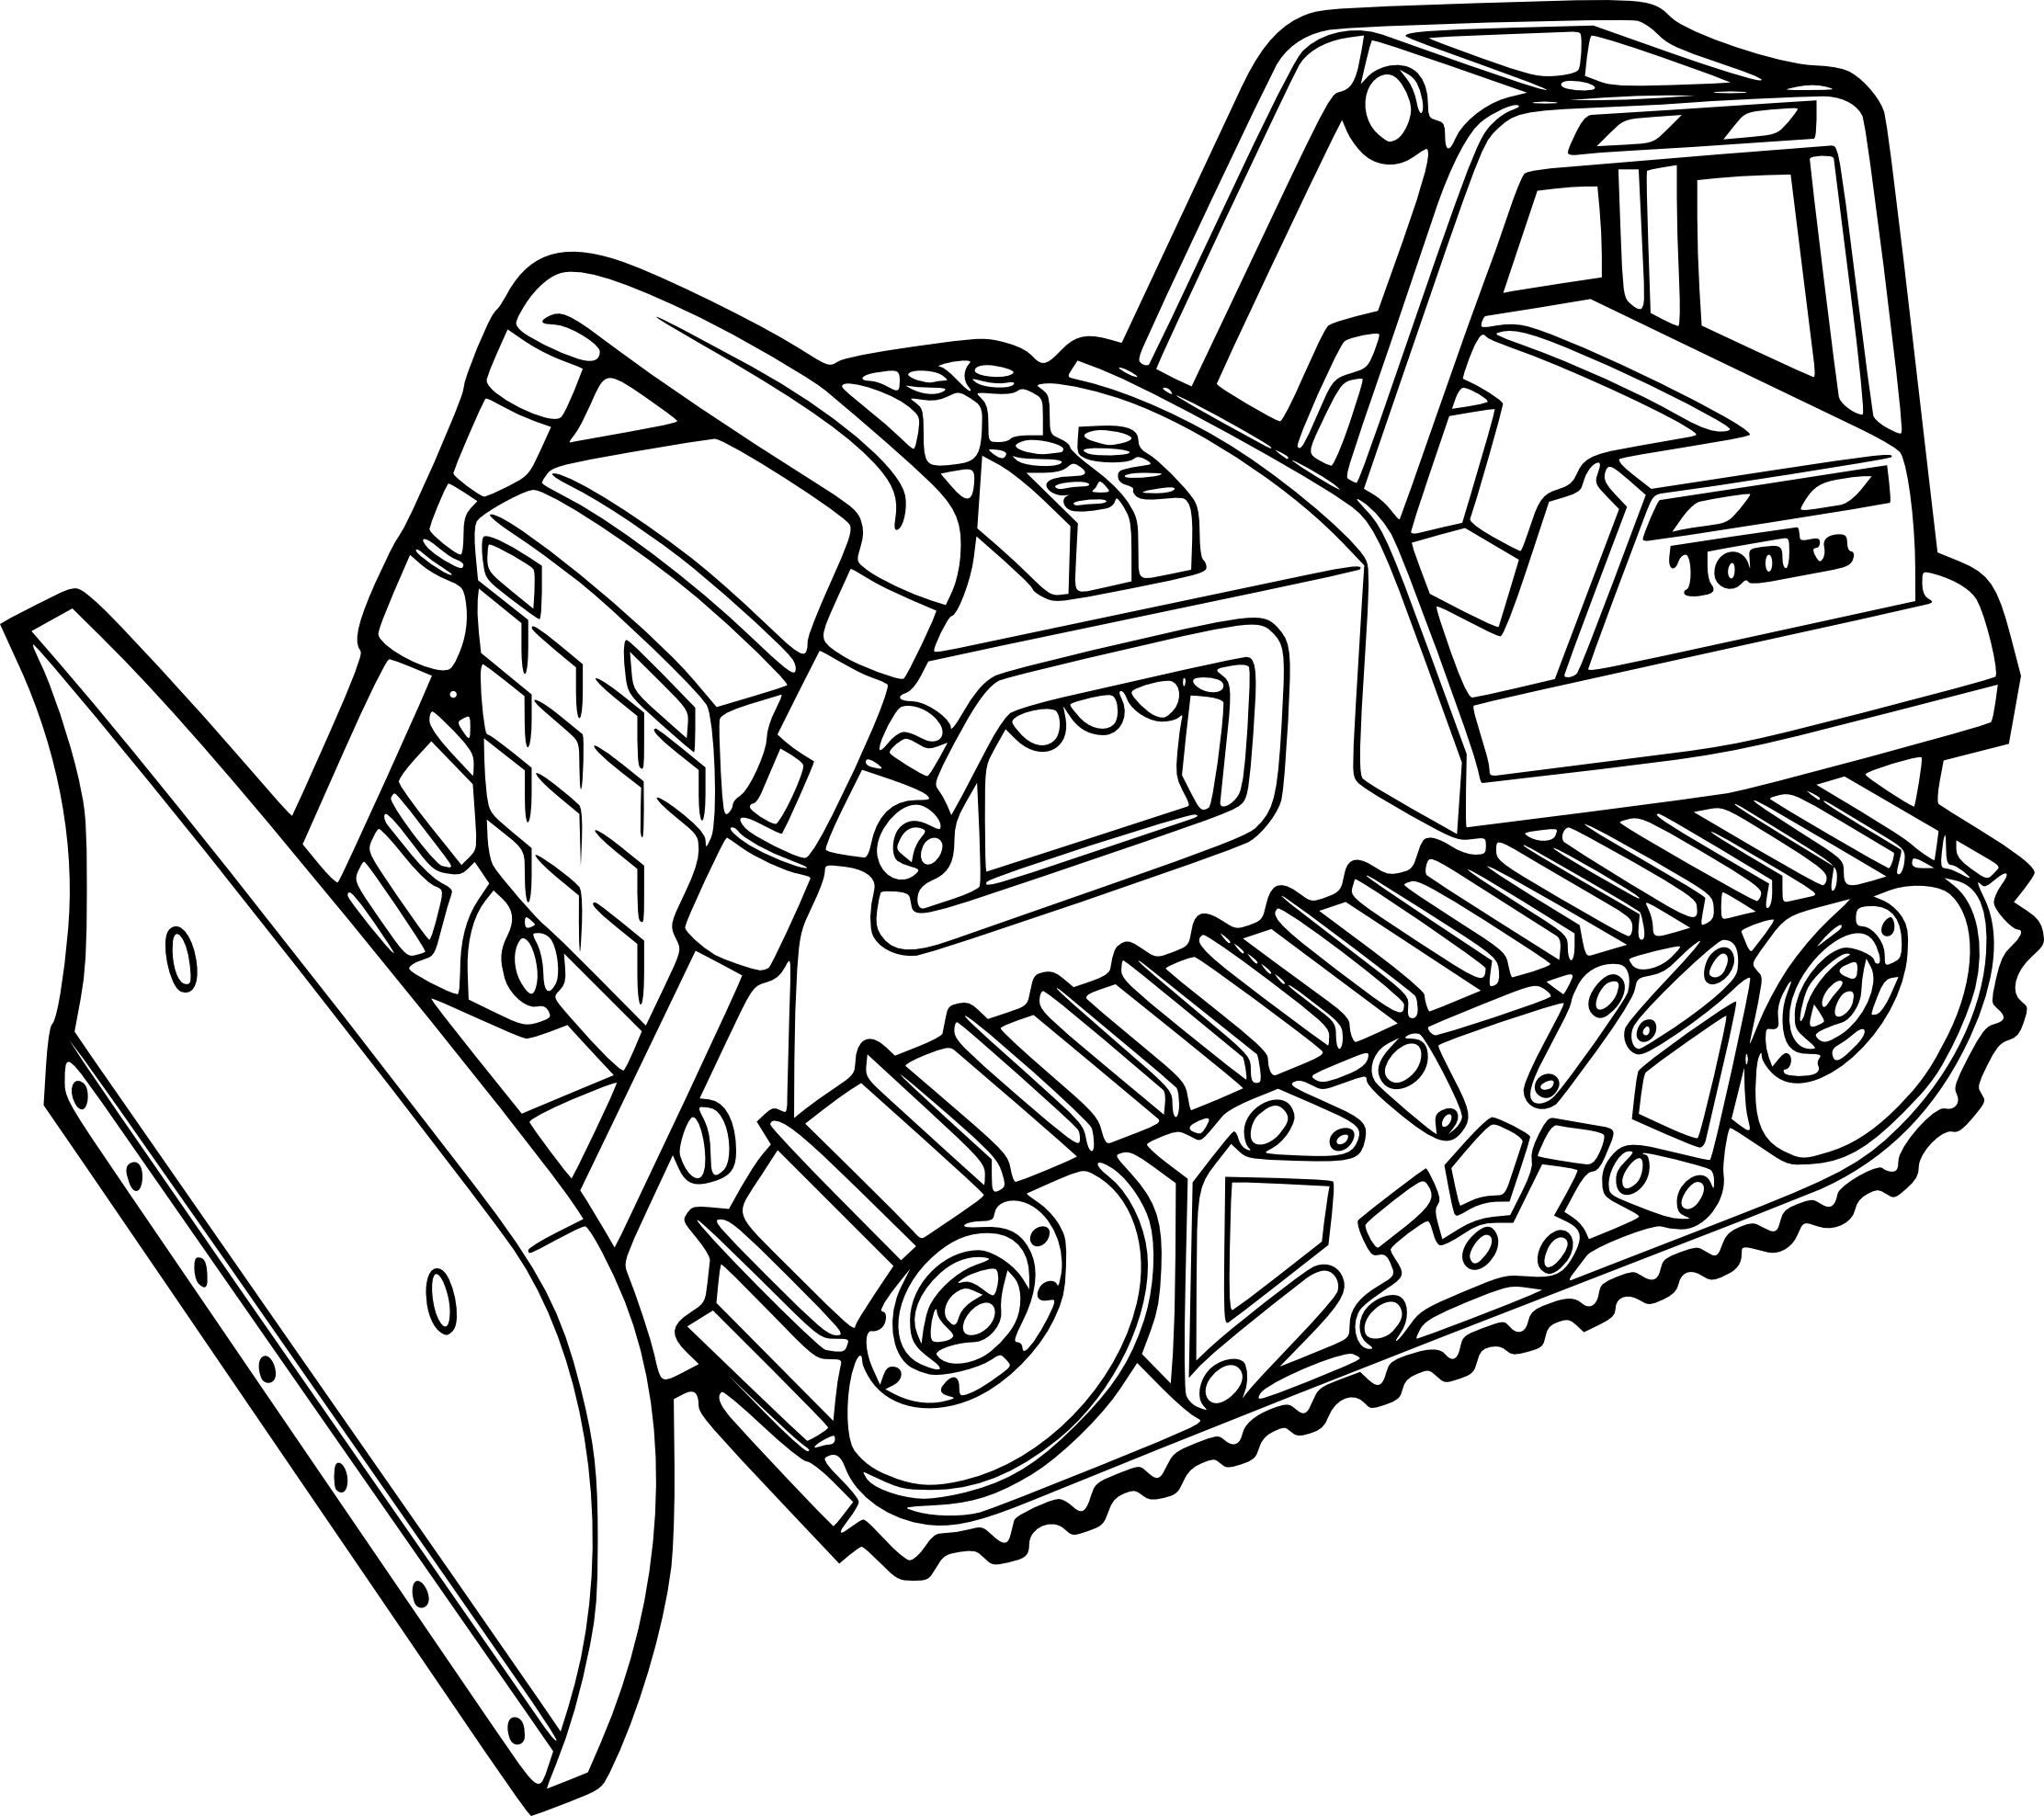 Bulldozer drawing and coloring page